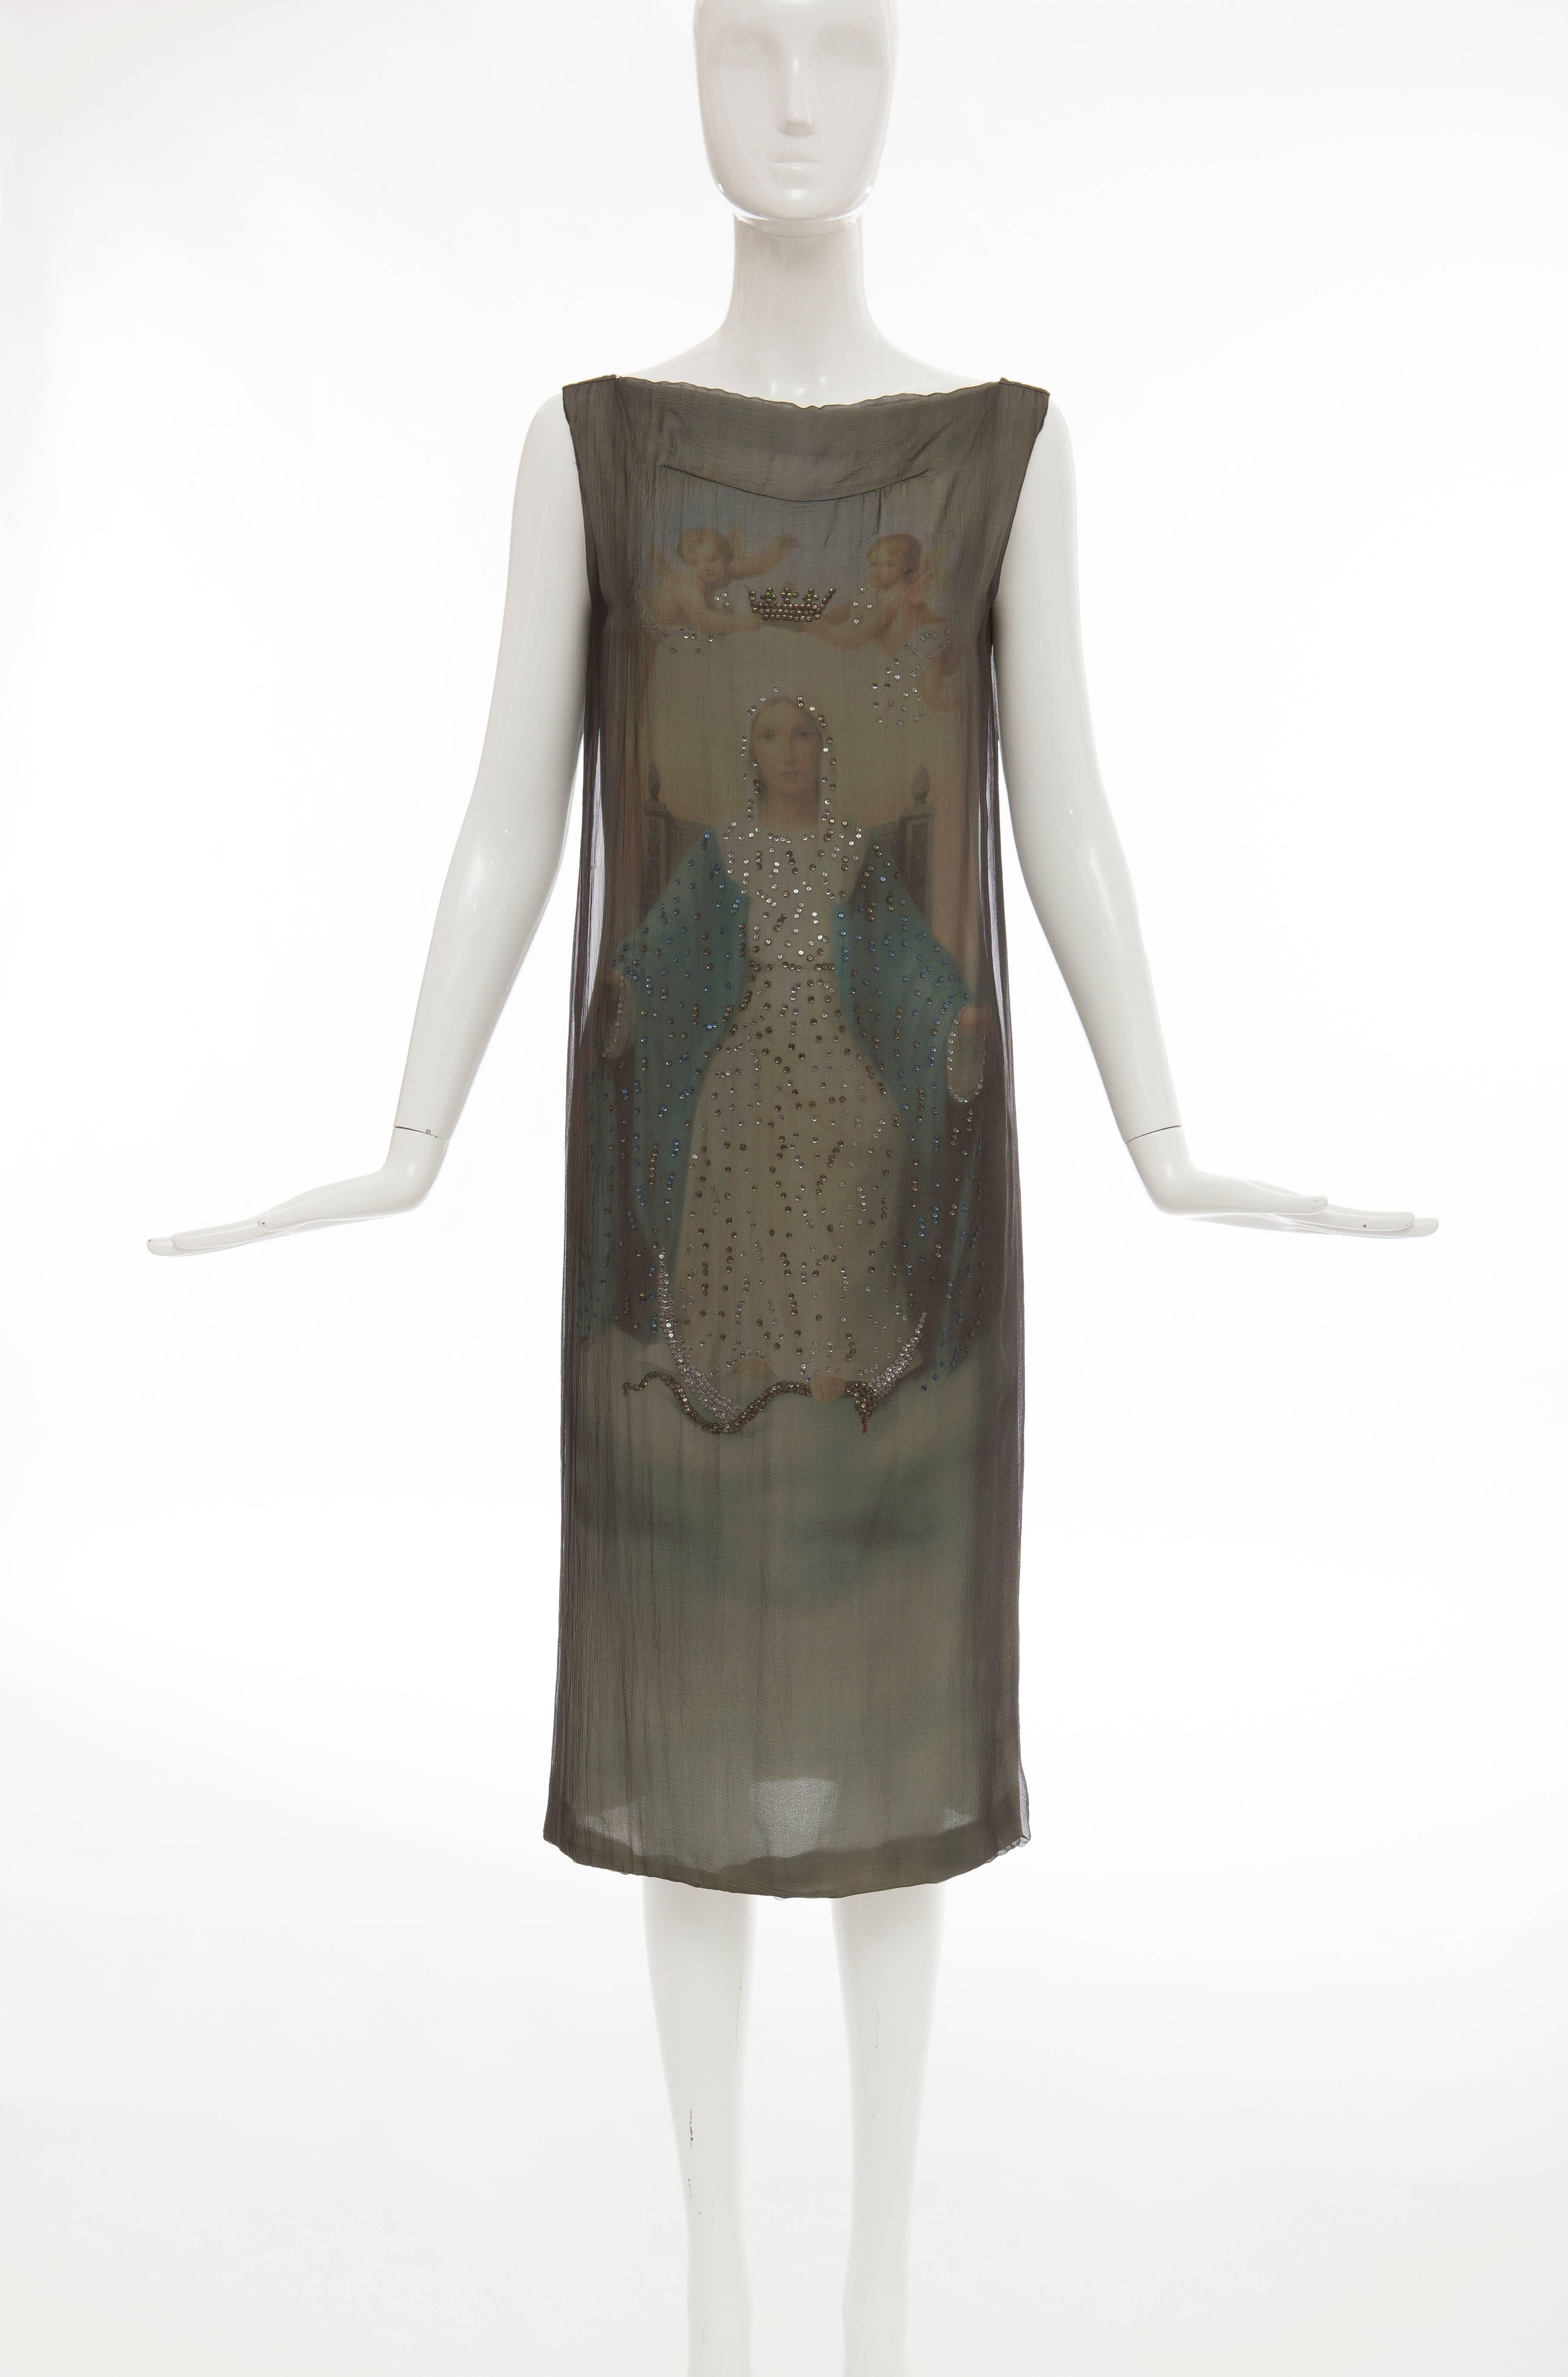 Dolce & Gabbana, Stromboli Collection, Spring-Summer 1998 silk chiffon sleeveless shift dress with Virgin Mary print underlay, diamanté detail with back zip.

IT. 40
US. 4

Bust: 36
Waist: 34
Hip: 36
Length: 45